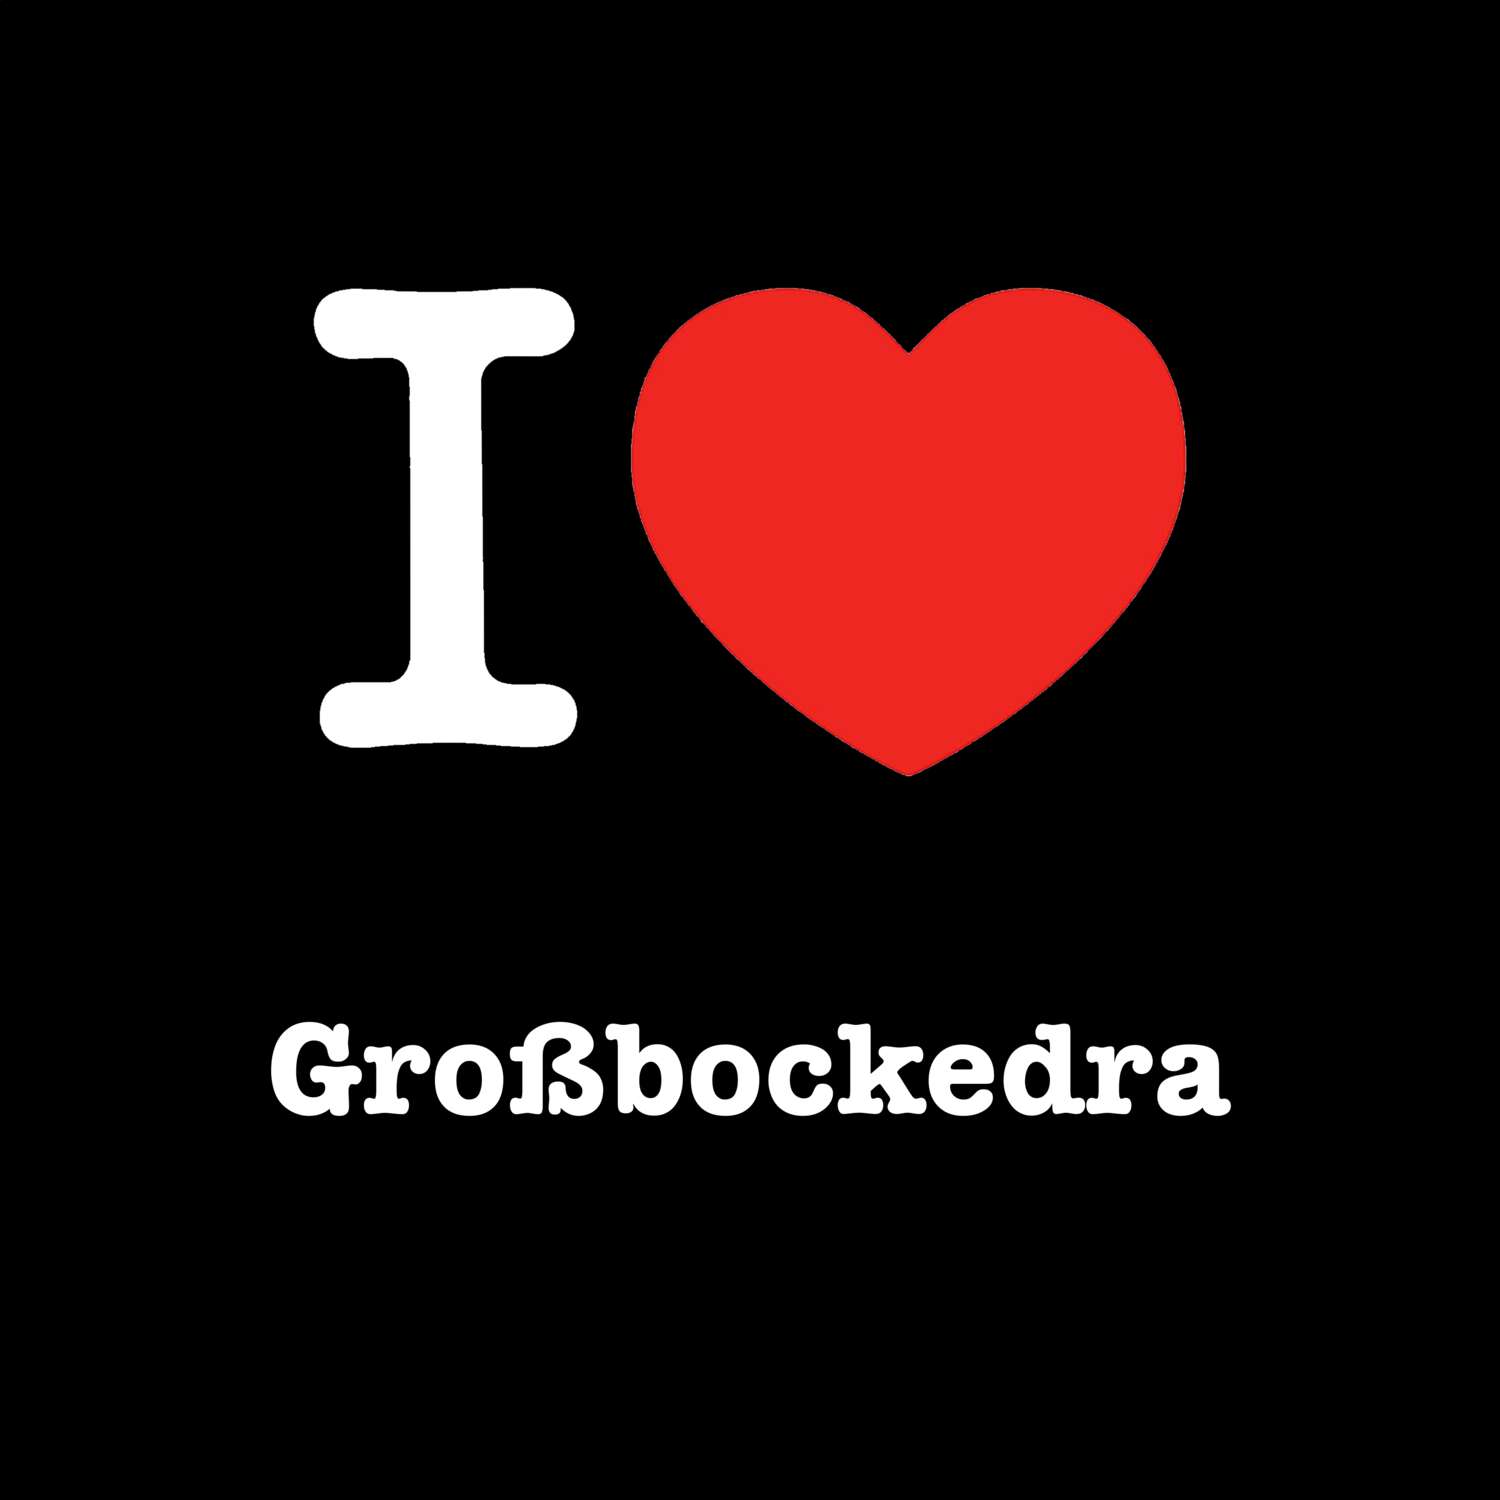 Großbockedra T-Shirt »I love«